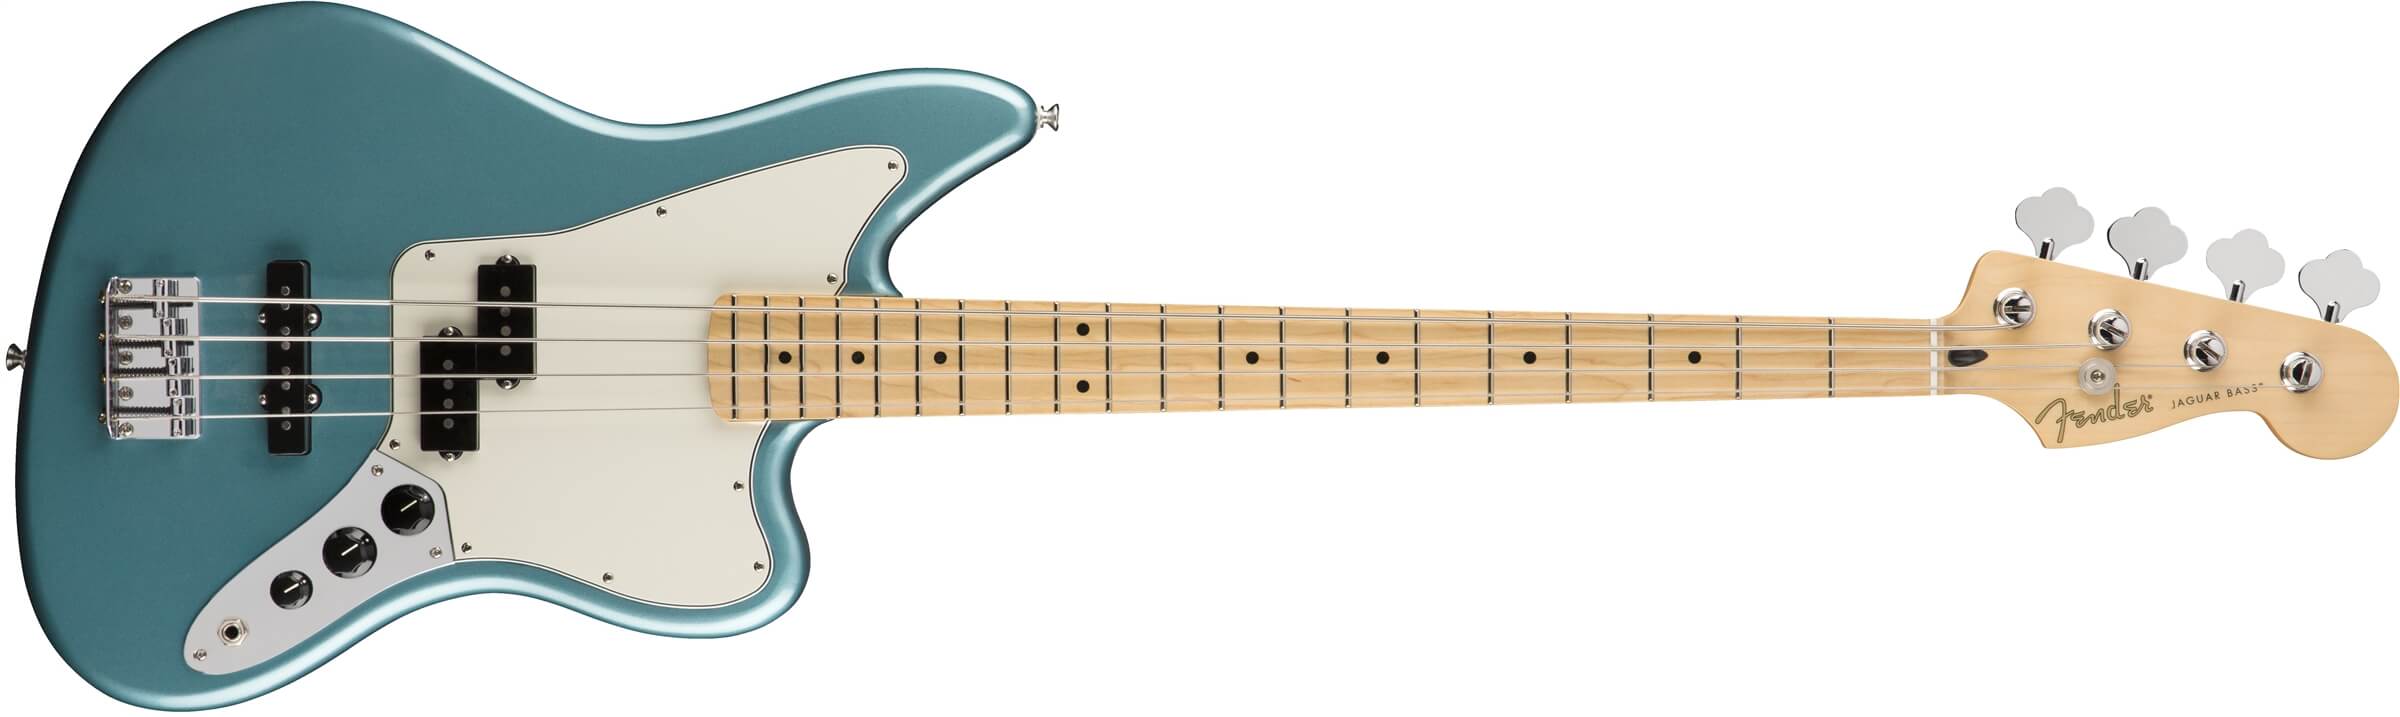 Fender Player Jaguar Bass Review | Performer Mag